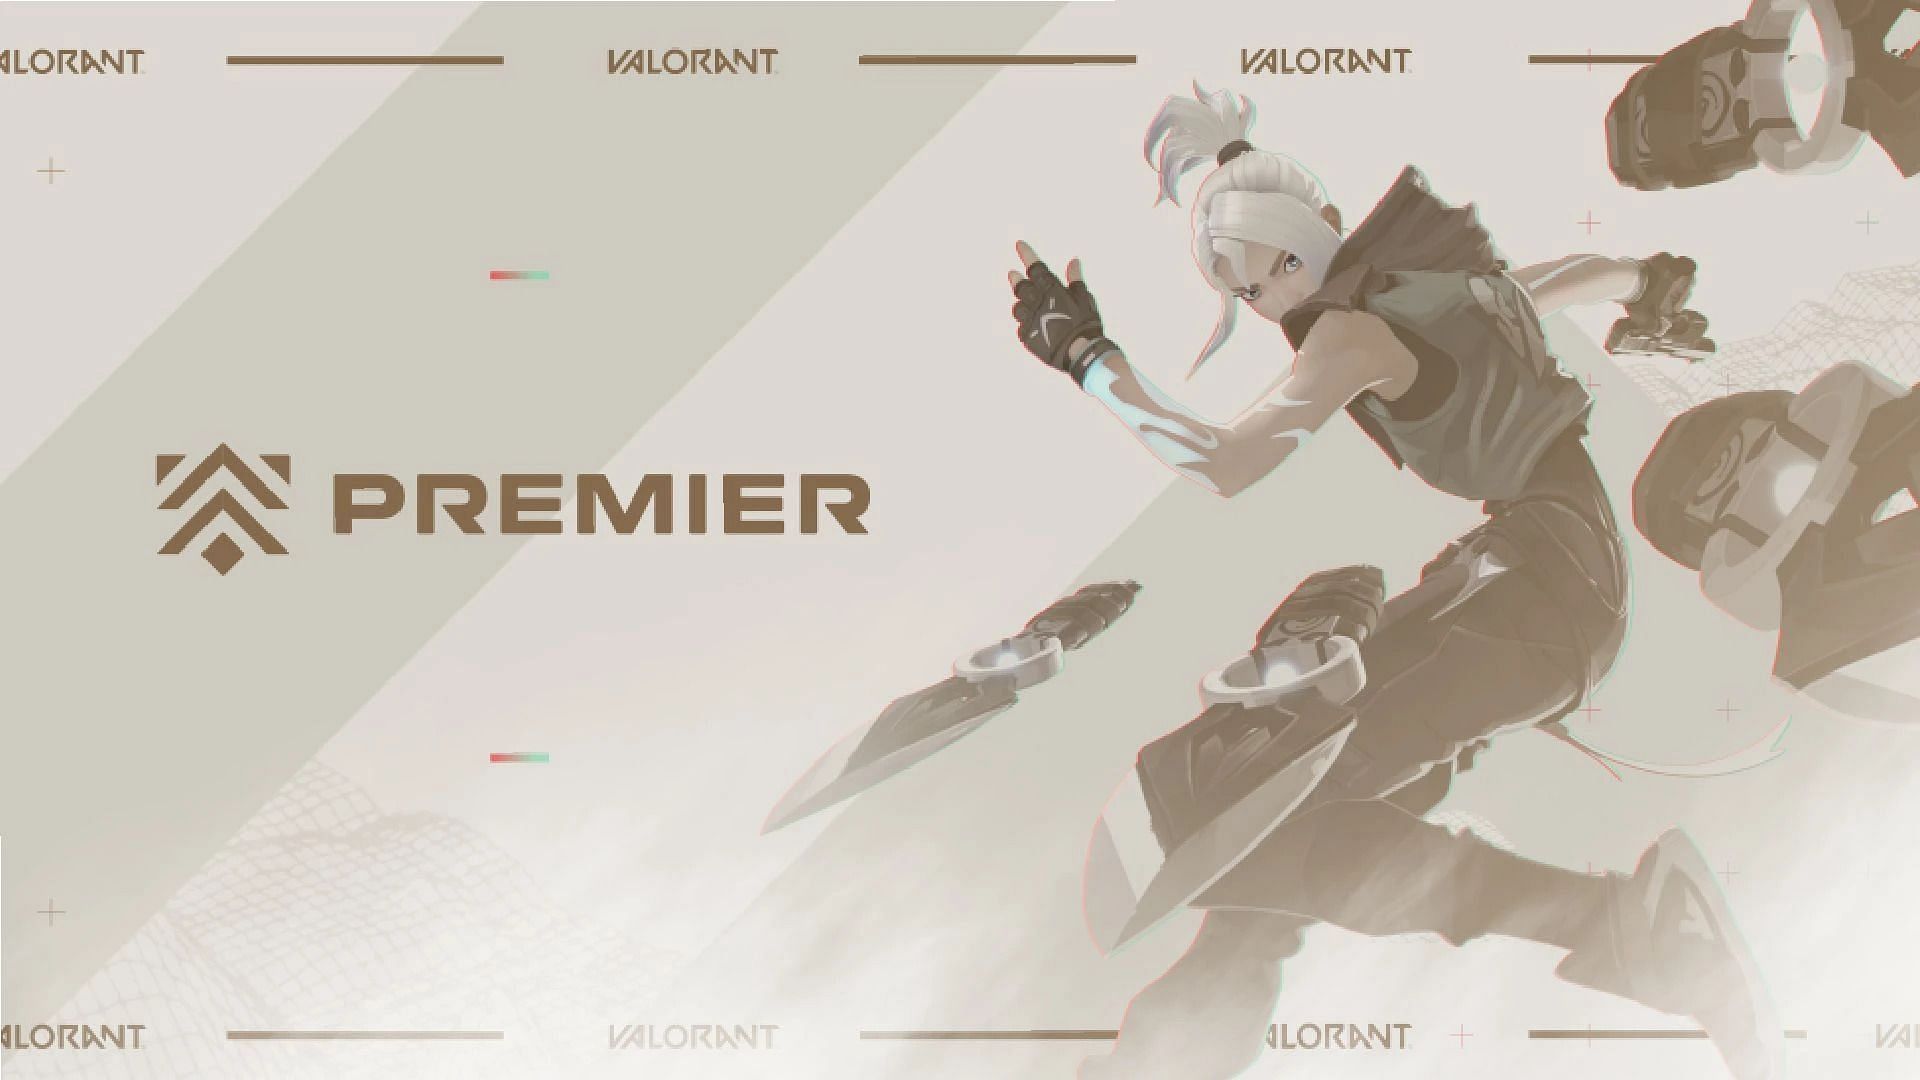 Premier Open Beta schedule revealed (Image via Valorant)